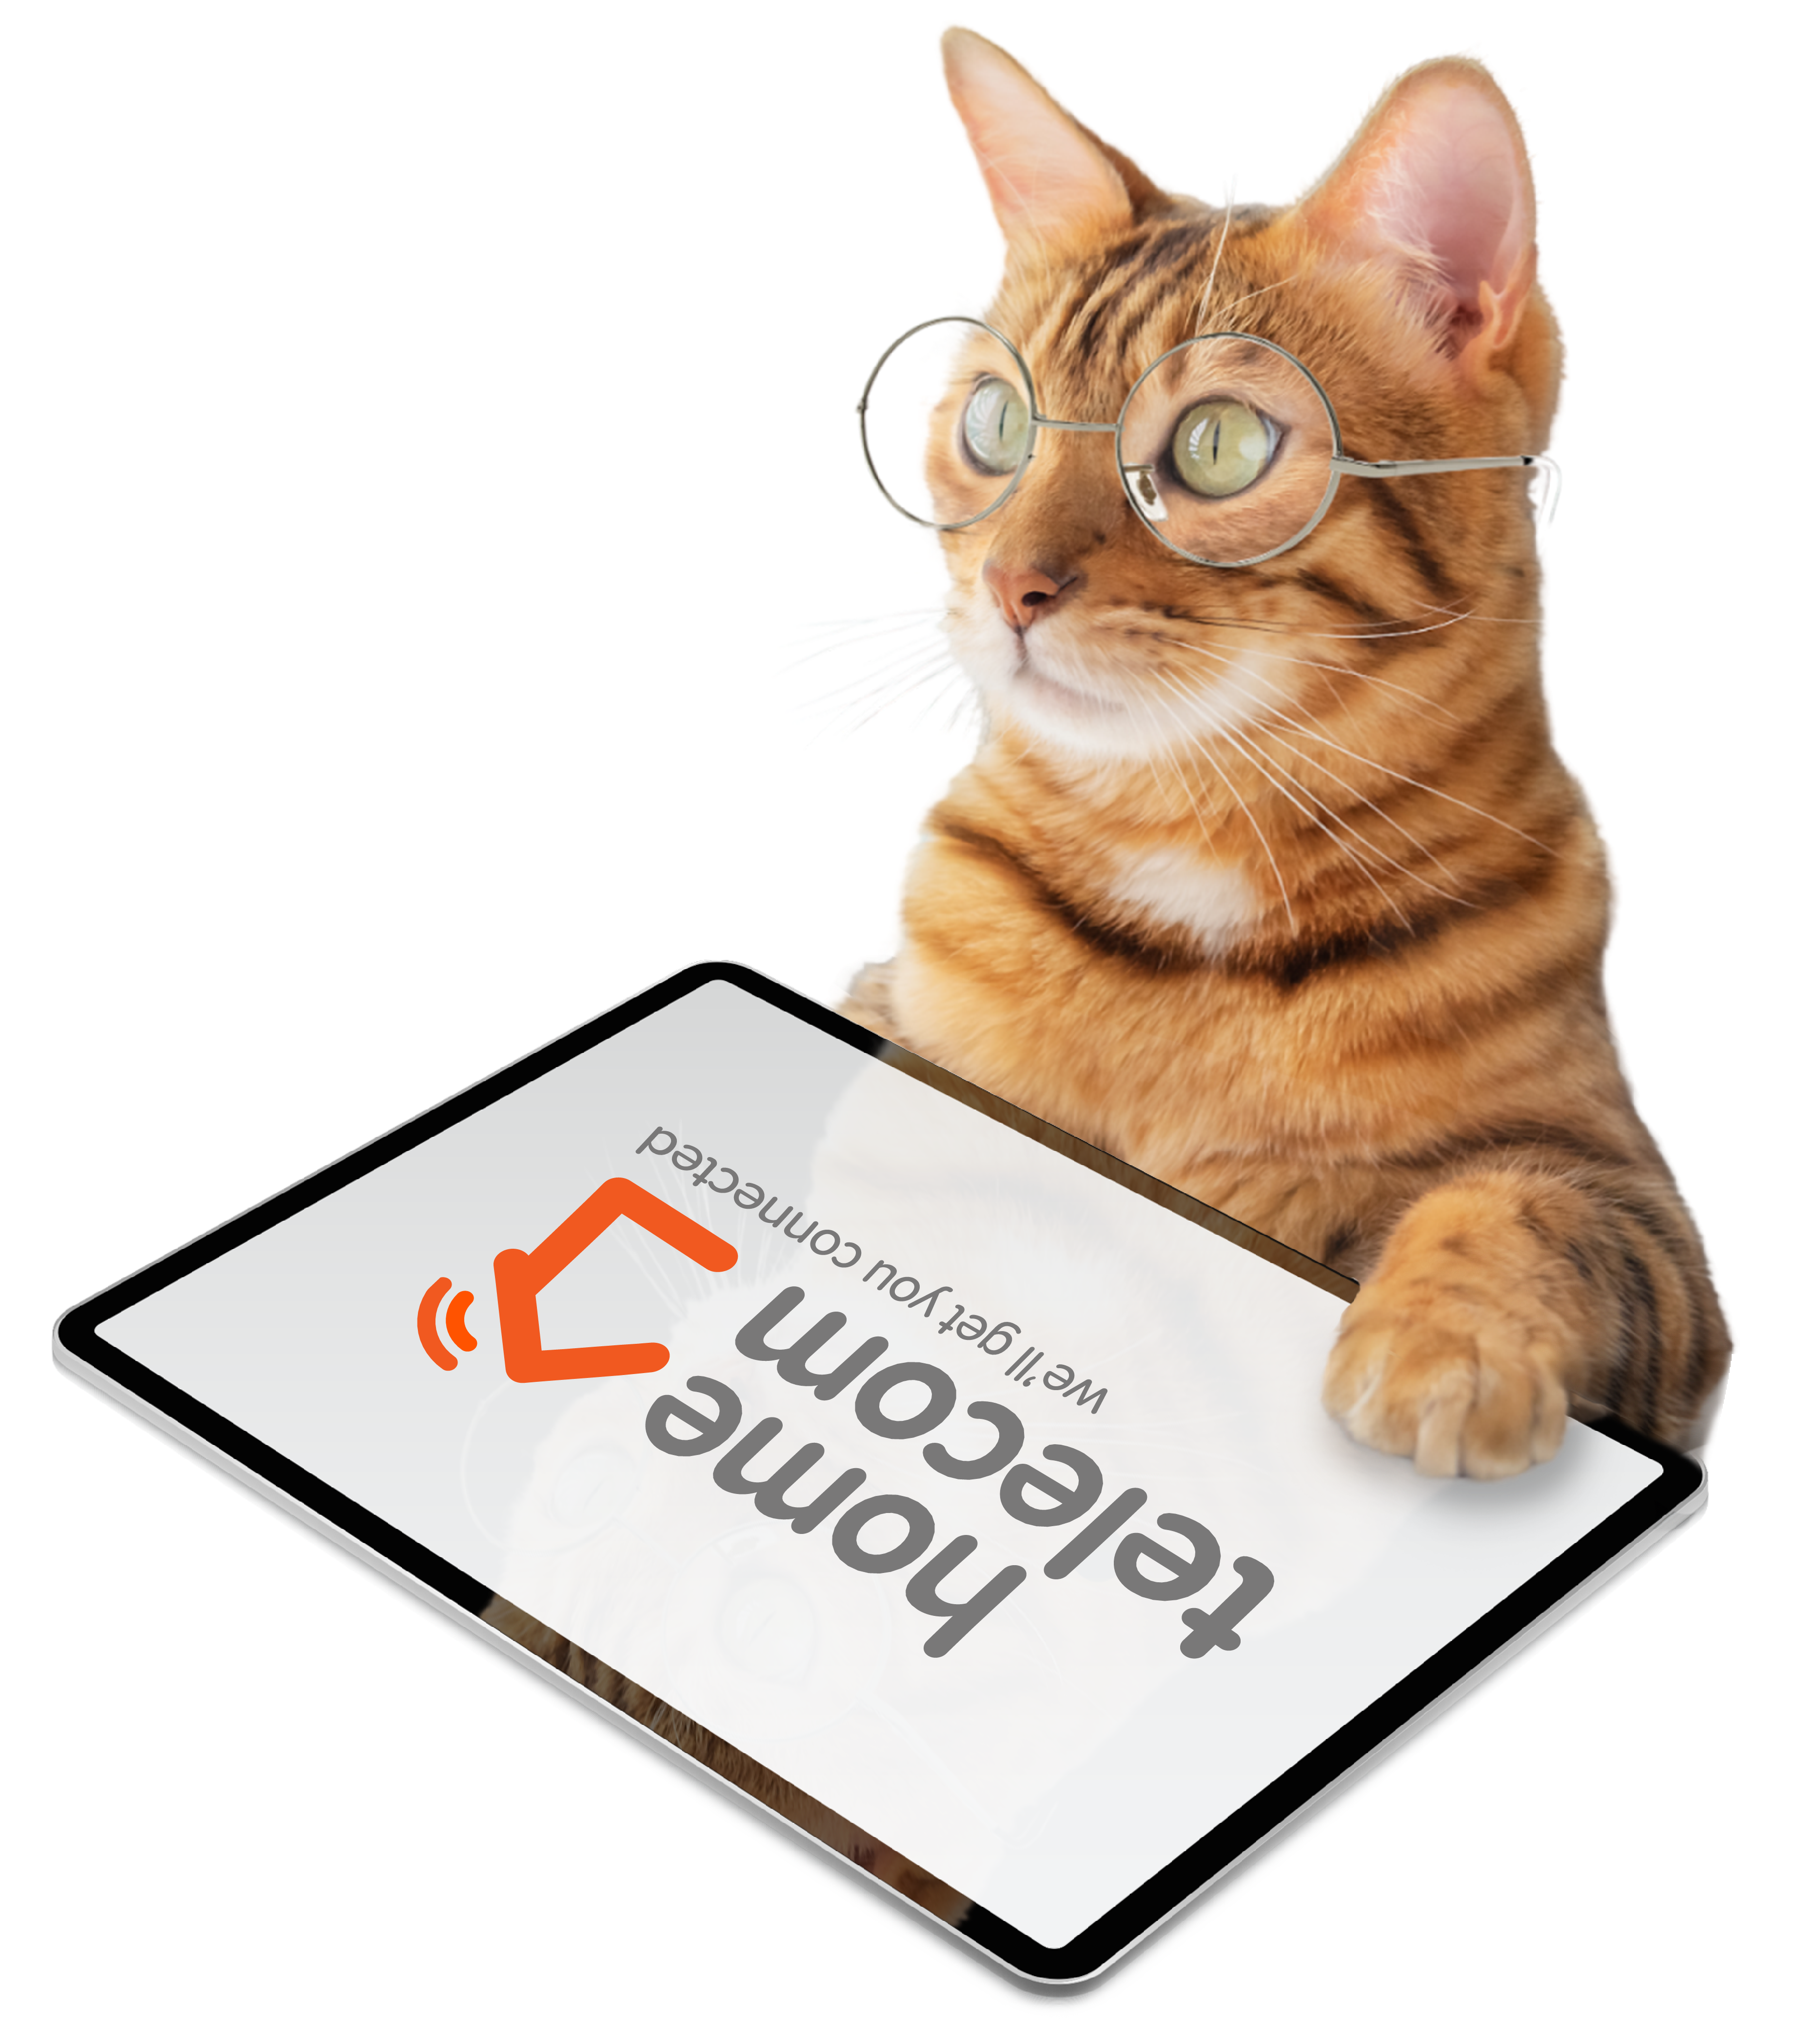 Cat holding a digital tablet